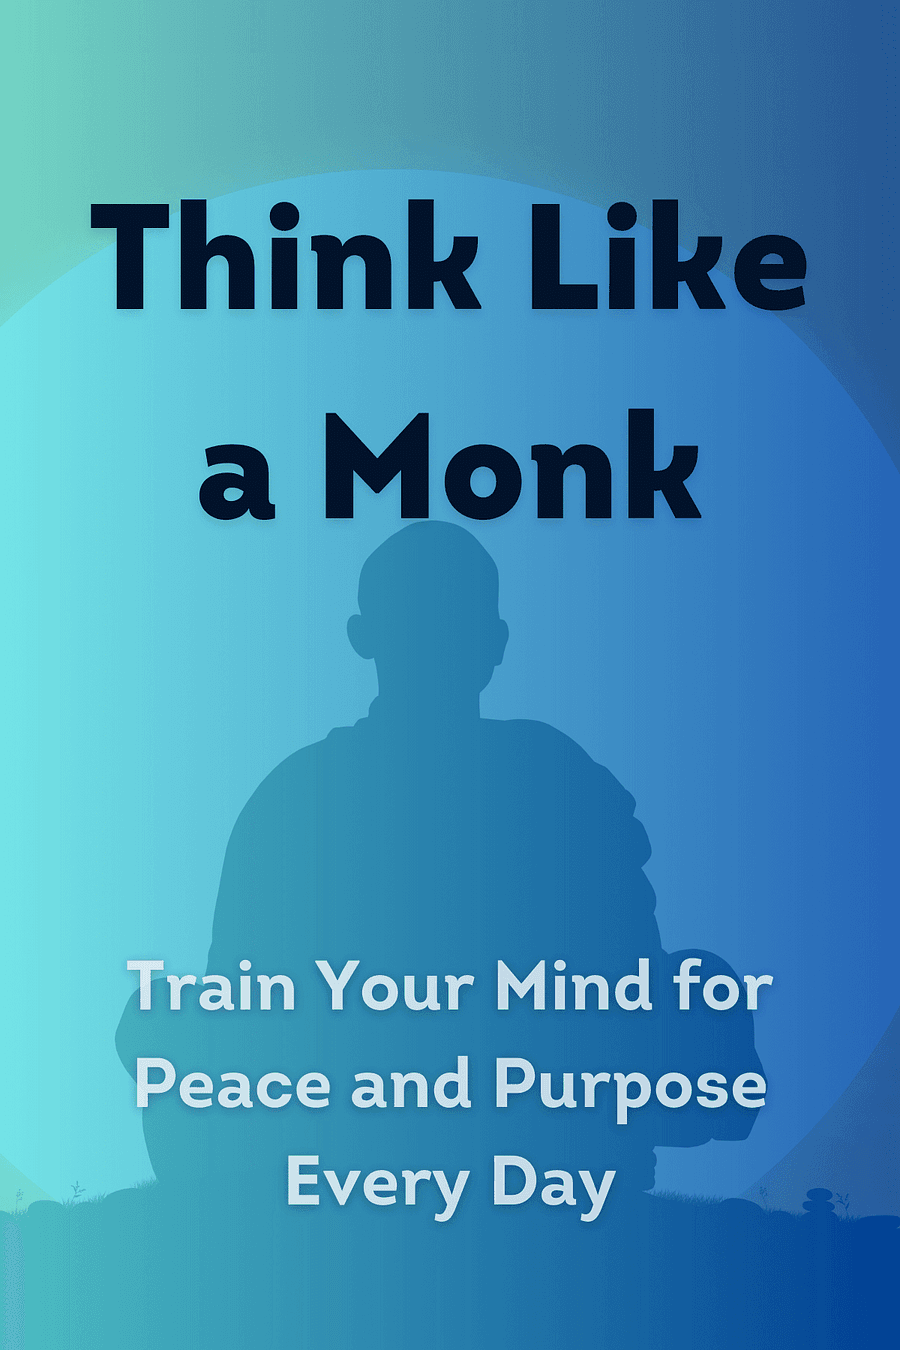 Think Like a Monk by Jay Shetty - Book Summary